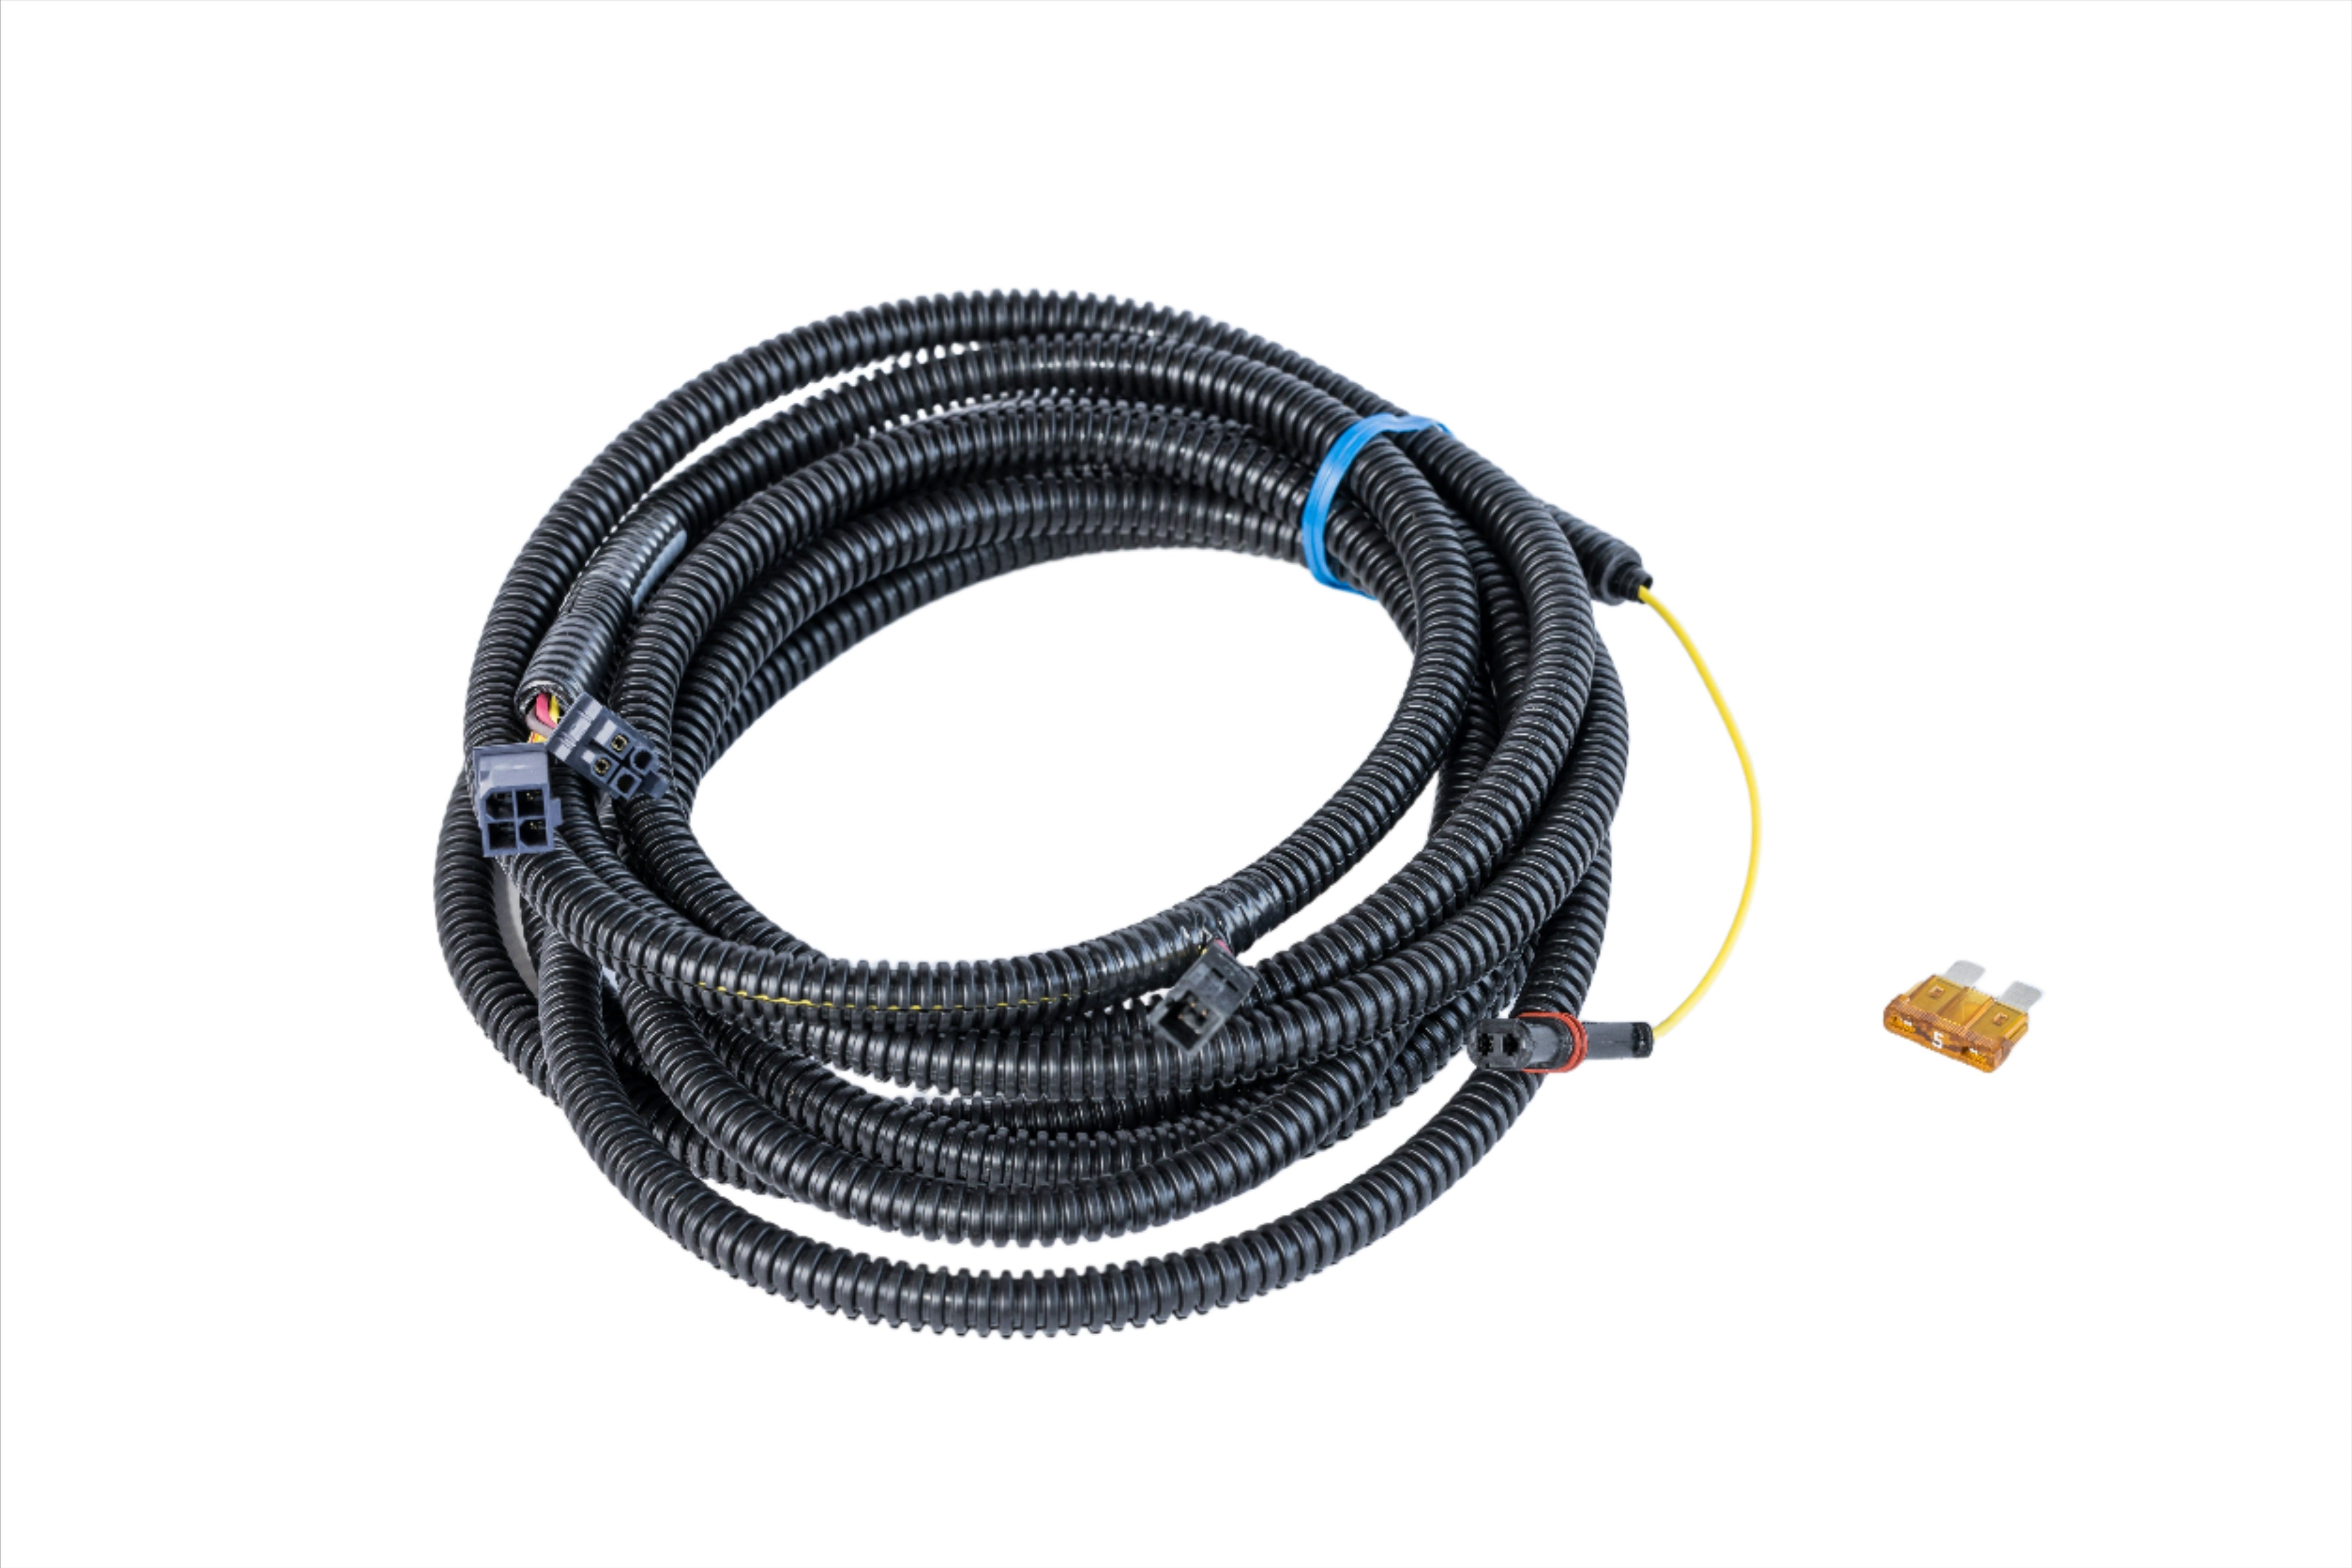 Webasto Wiring Harness Adapter For Smartemp 3.0 Evo40/55 5013930A Heater Part